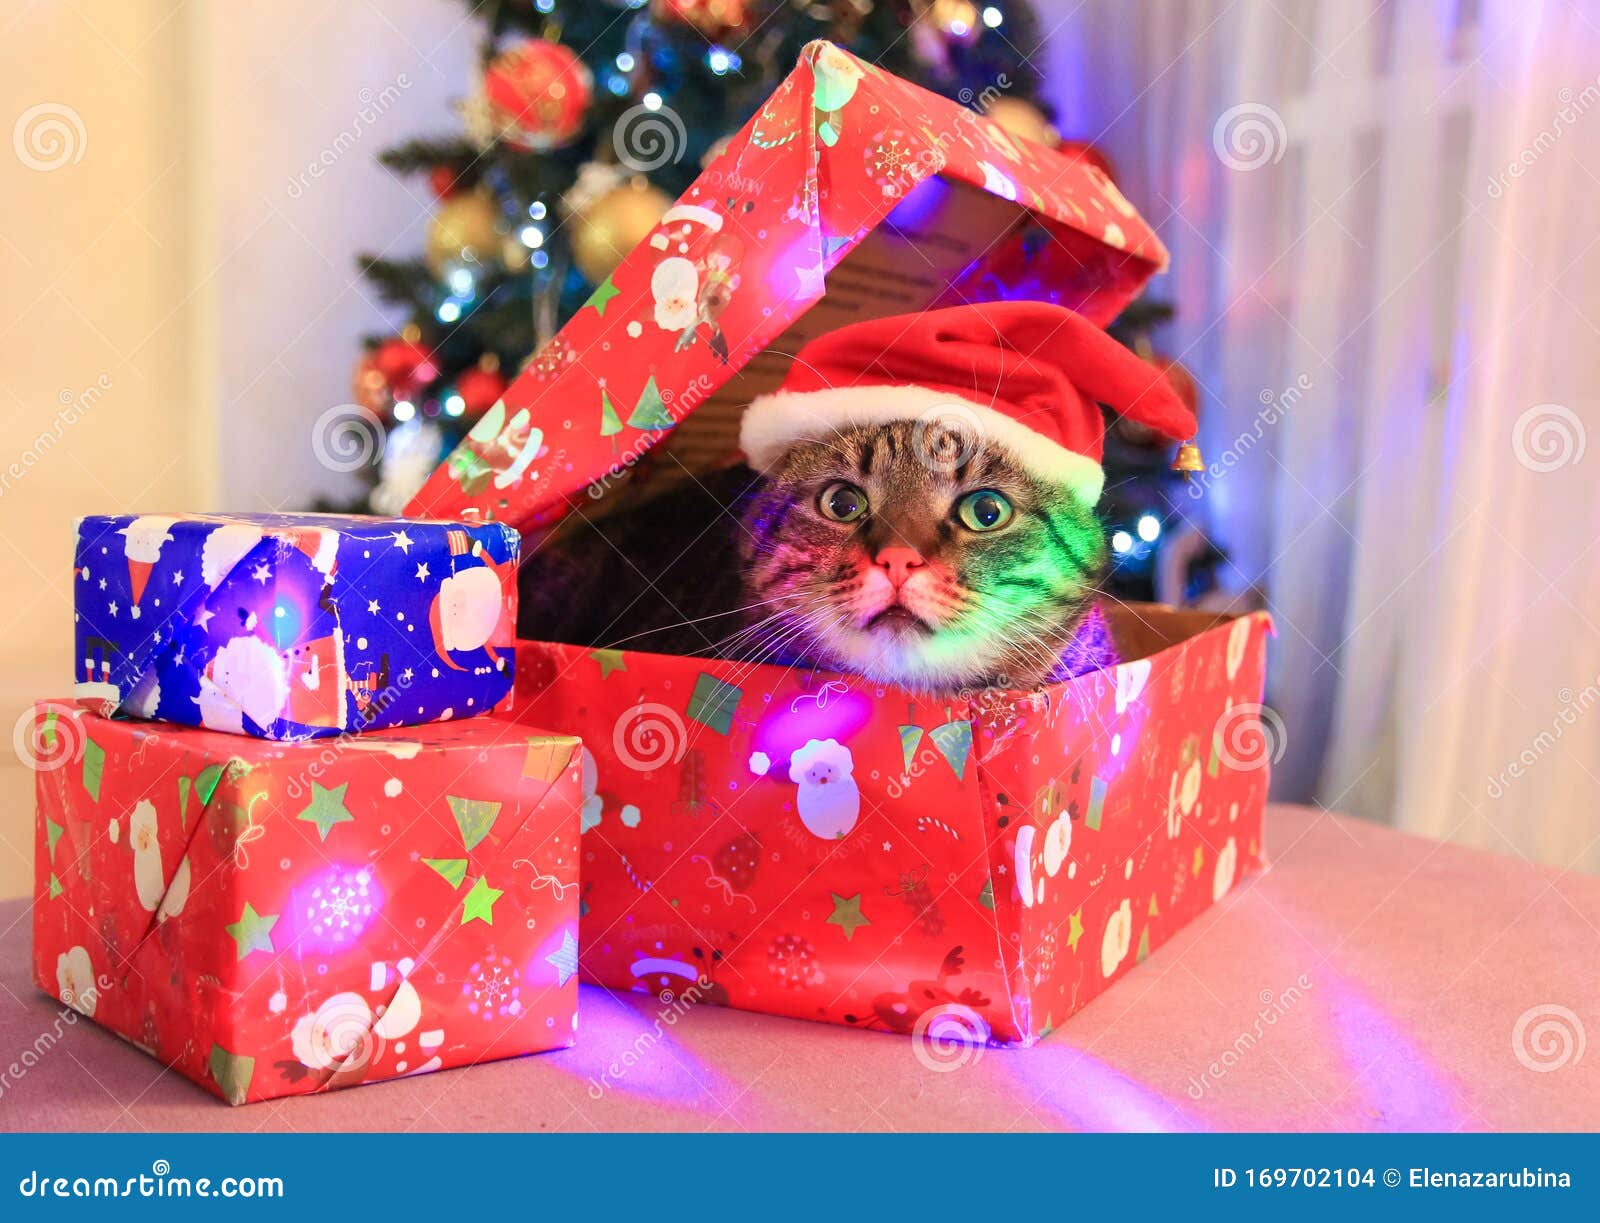 Funny Cat Wearing Santa Hat Inside A Present Box Stock Photo Image Of Funny Santa 169702104